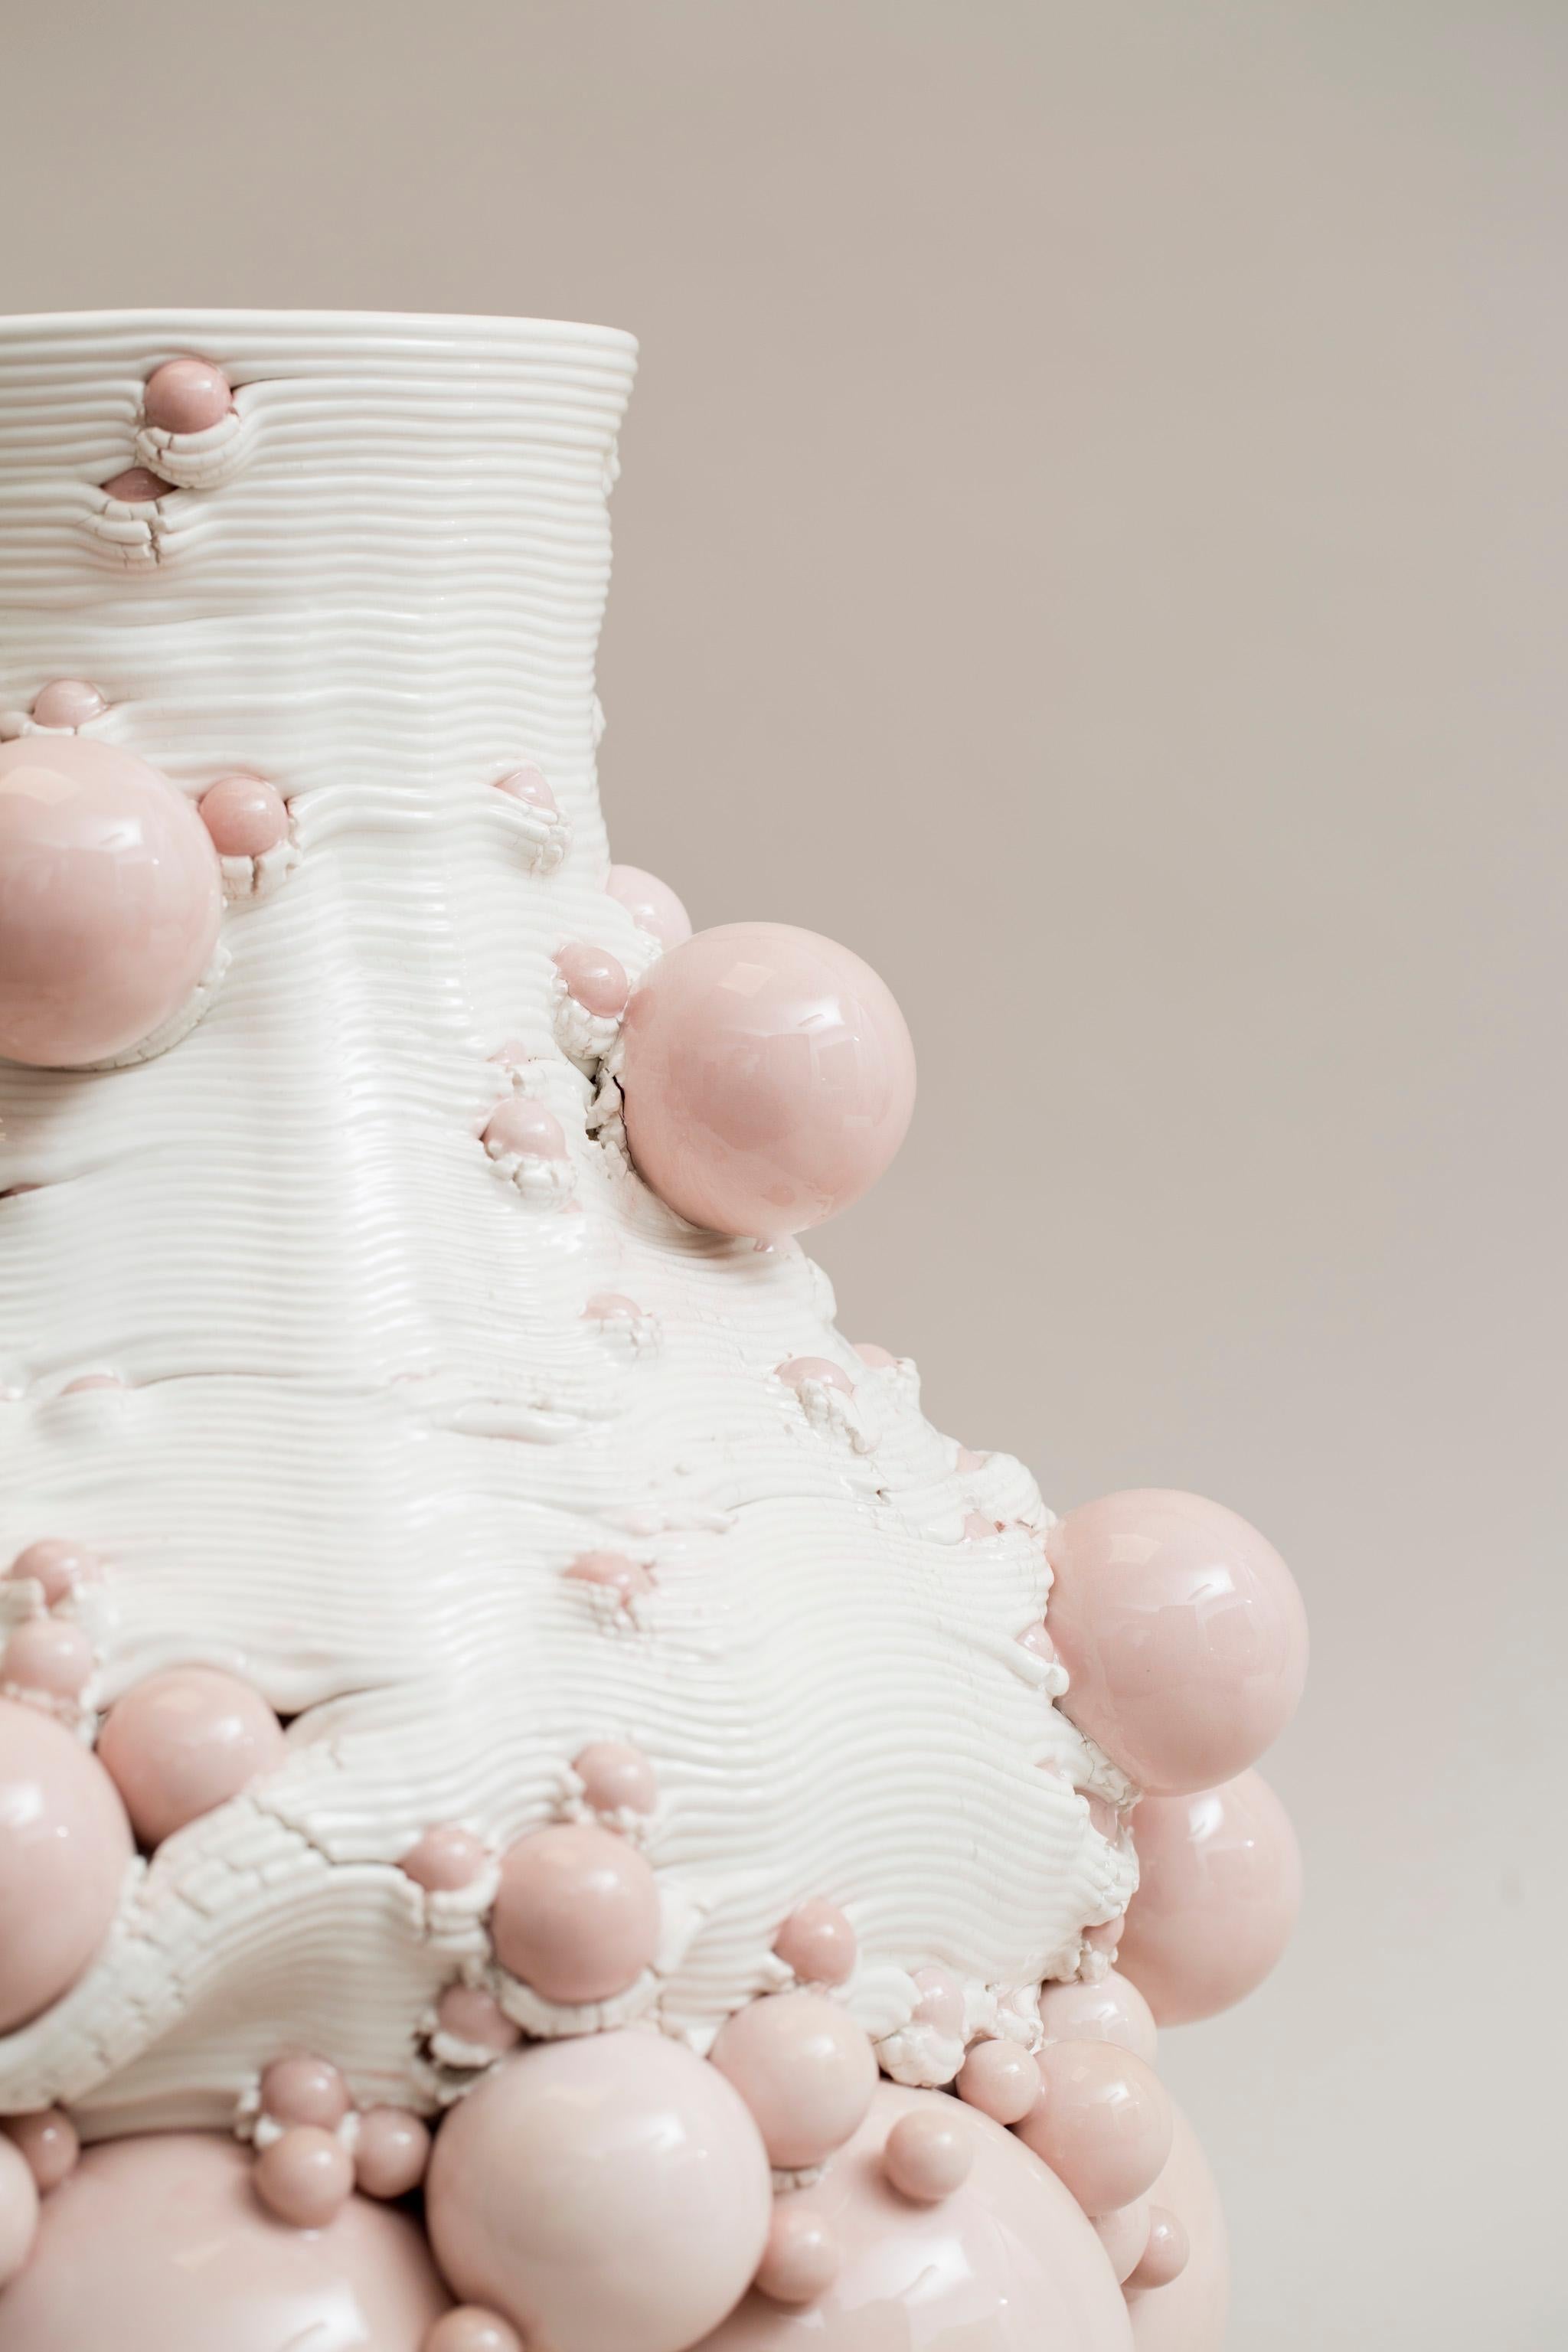 White Ceramic Sculptural Vase Italian Contemporary, 21st Century contemporary For Sale 7